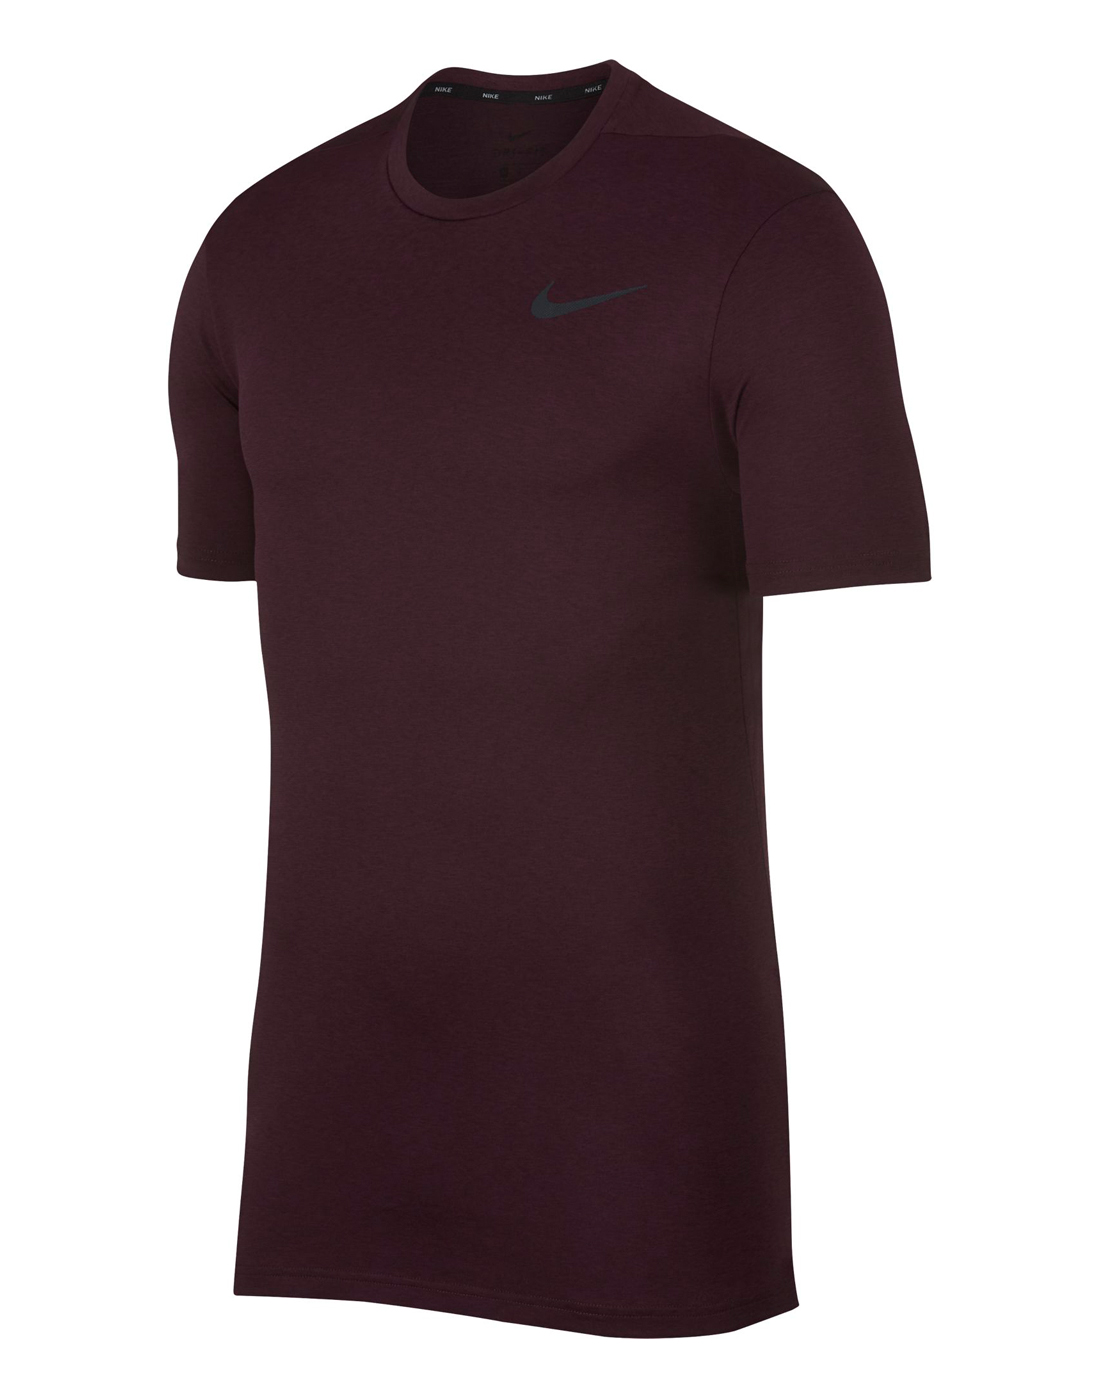 Nike Mens Hyper-Dry Breathe Tee - Burgundy | Life Style Sports UK